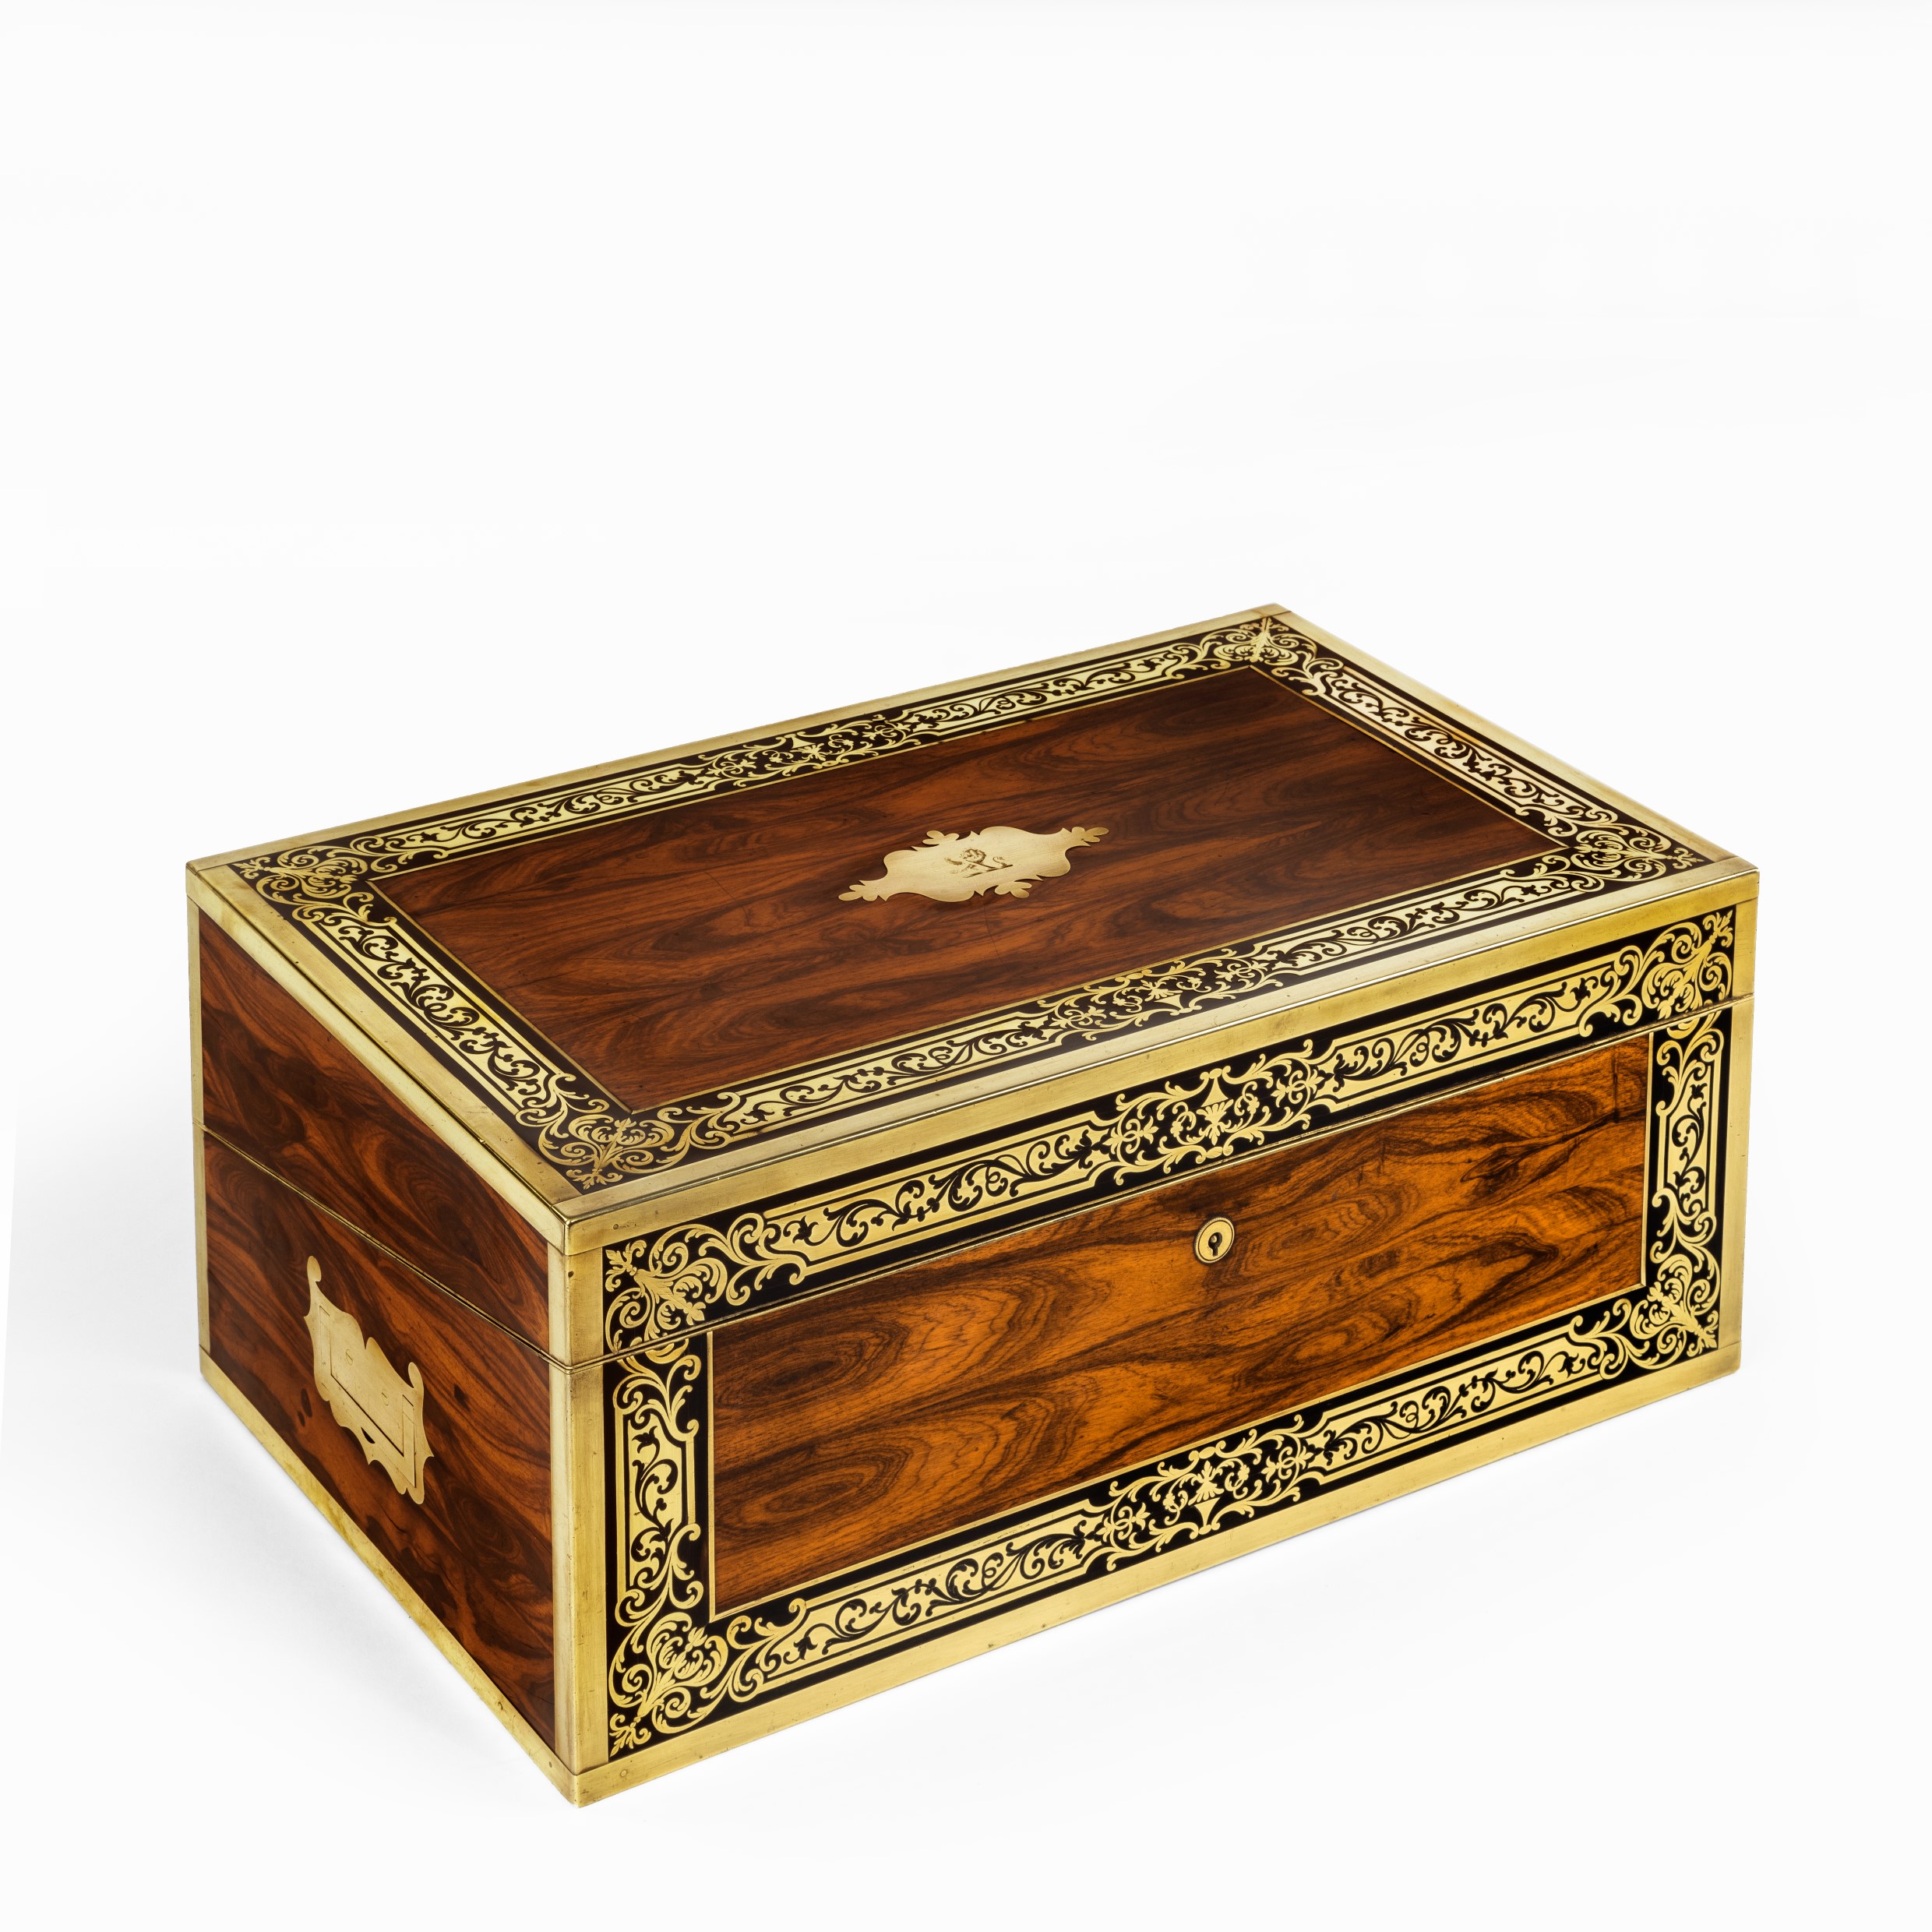 A superb William IV brass-inlaid kingwood writing box by Edwards